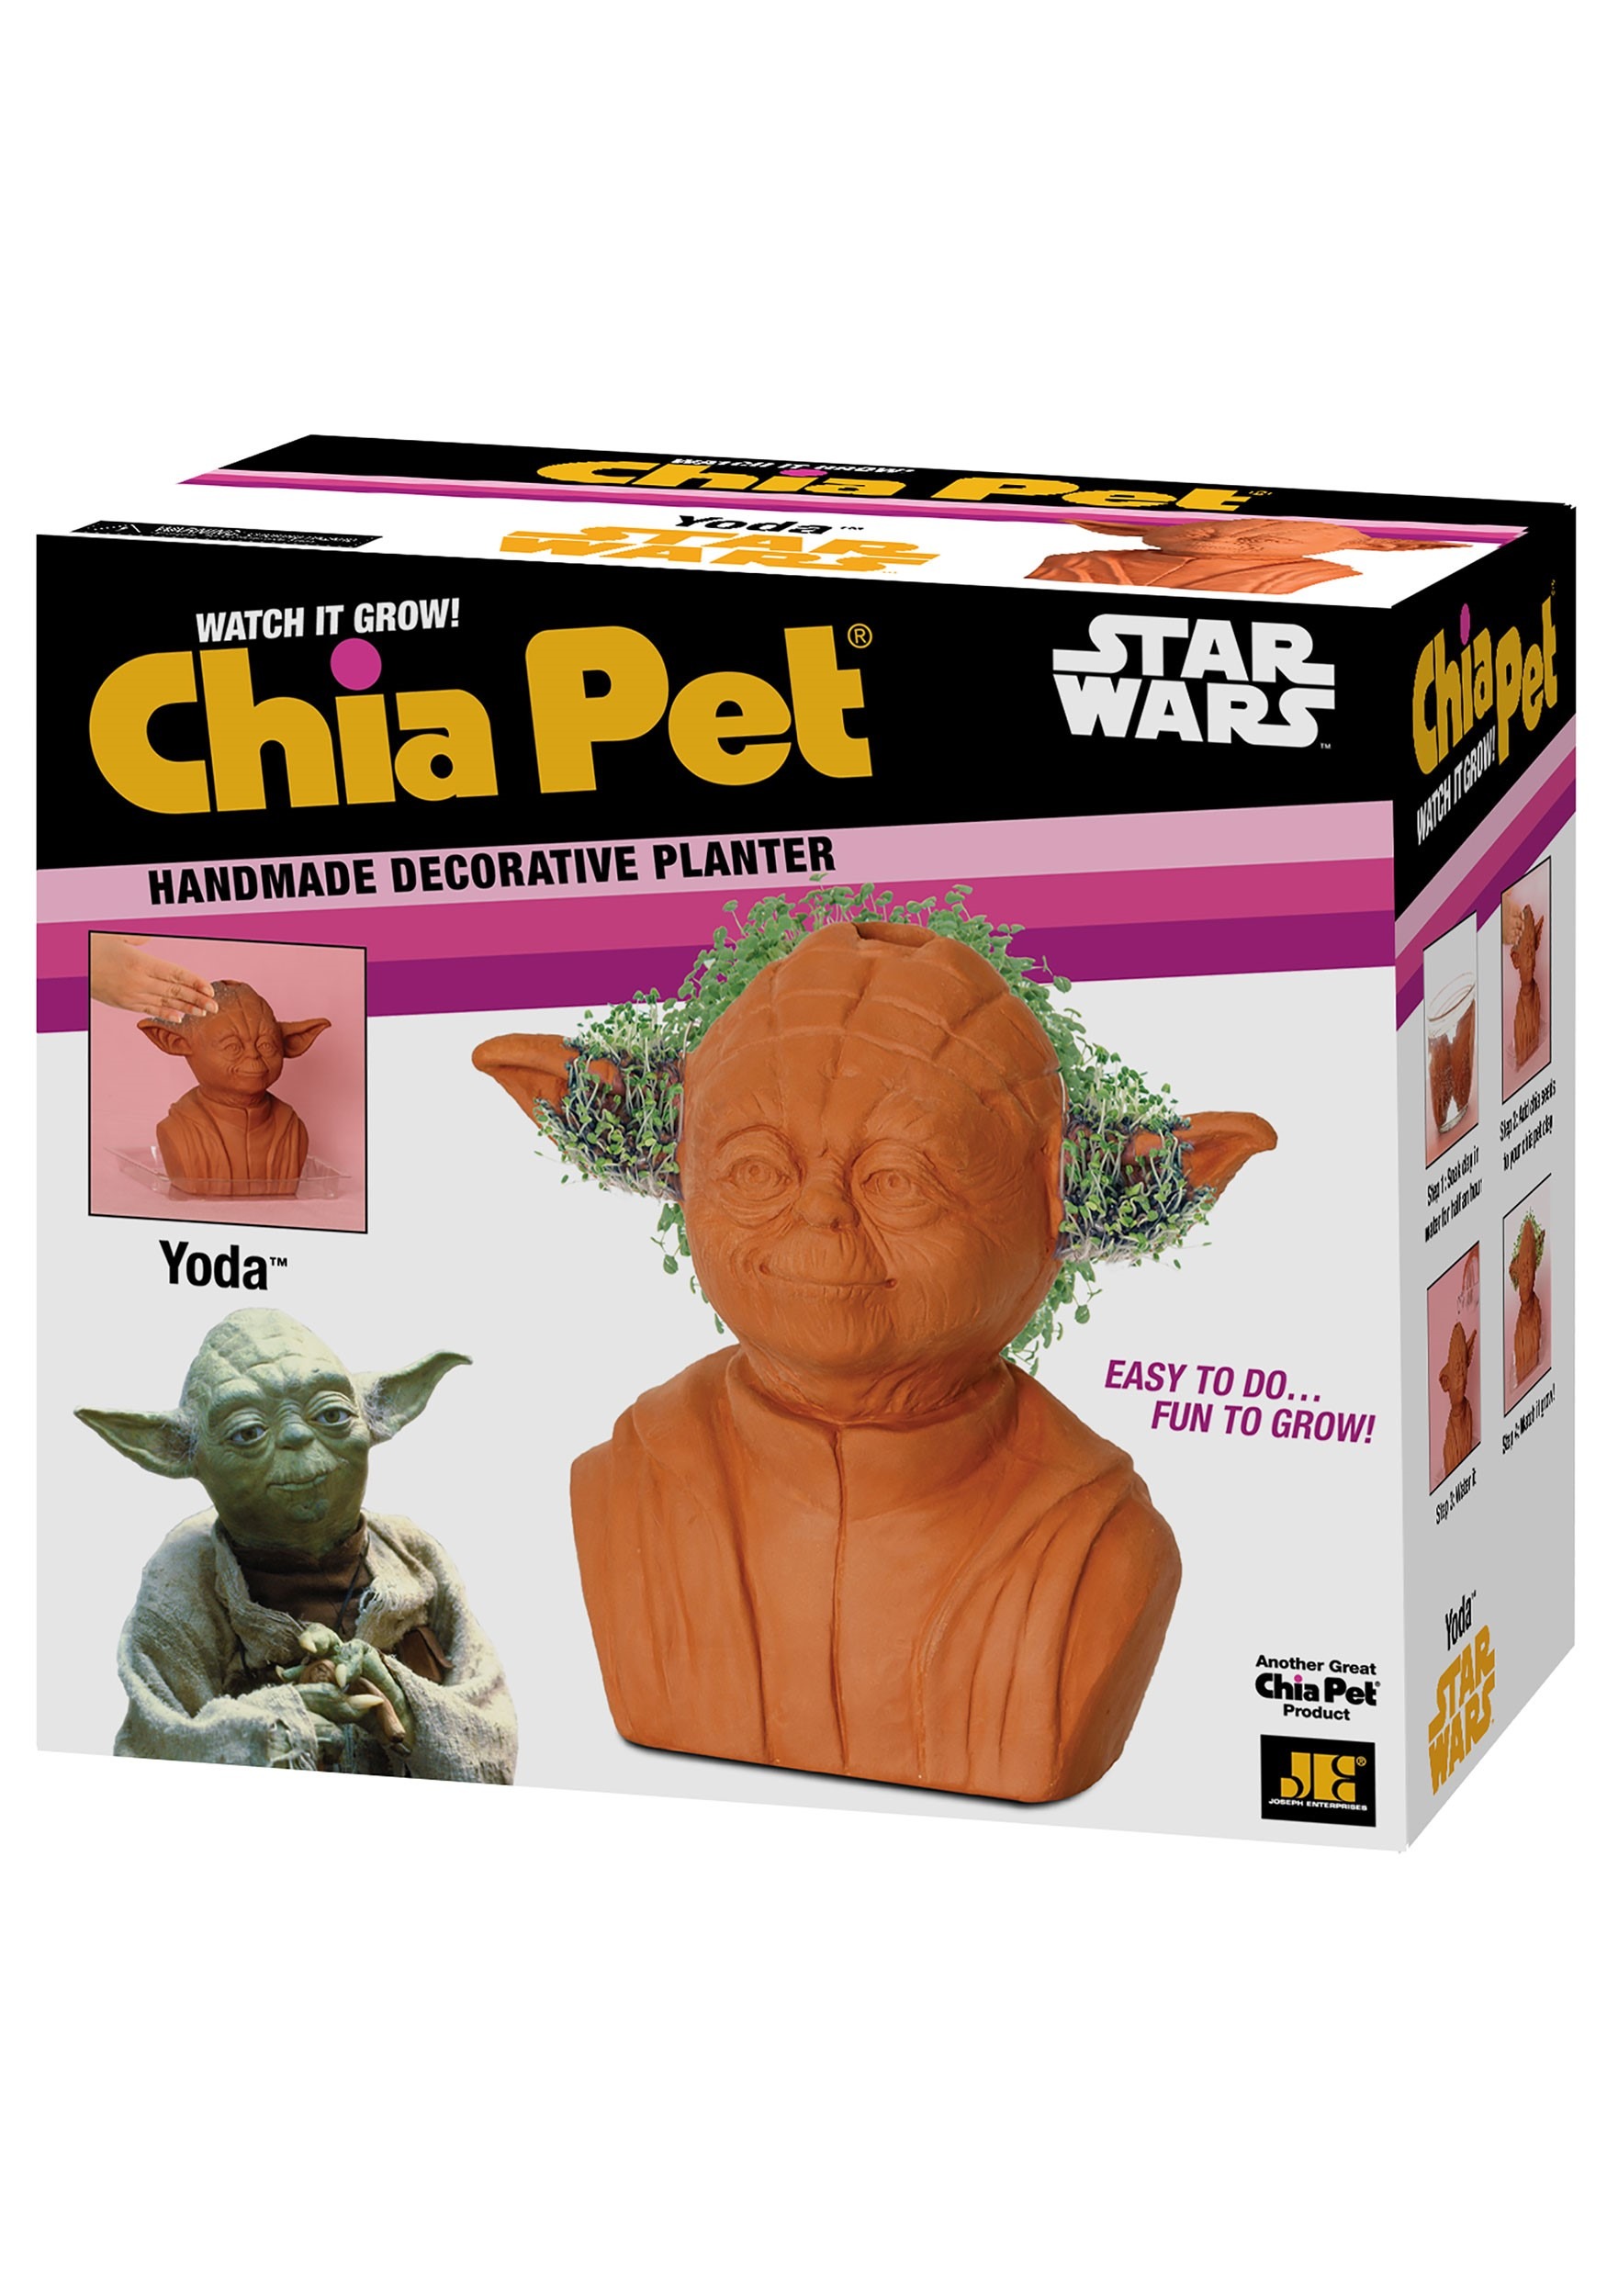 Star Wars The Mandalorian The Child Chia Pet